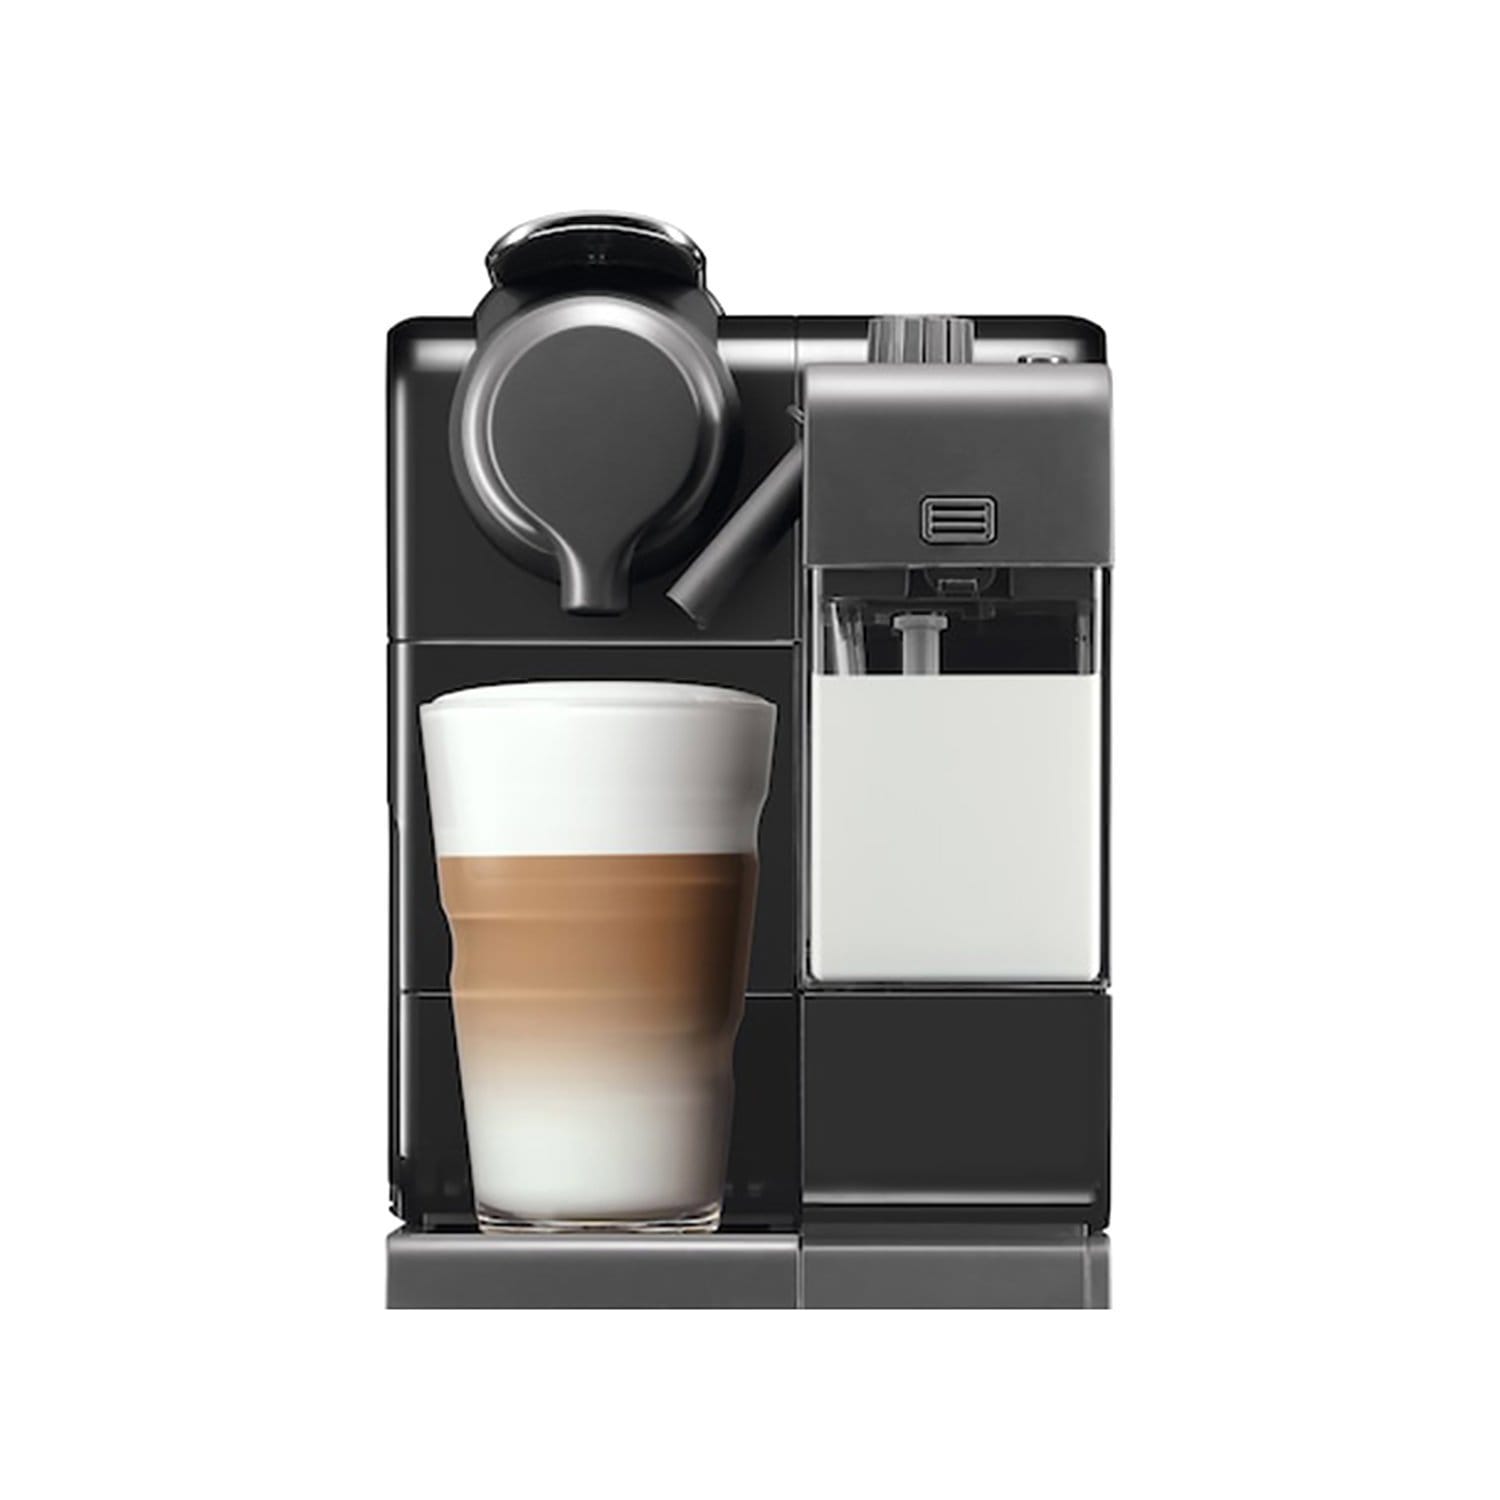 Nespresso ماكينة تحضير القهوة - أسود - F521-ME-BK-NE - جاشنمال هوم